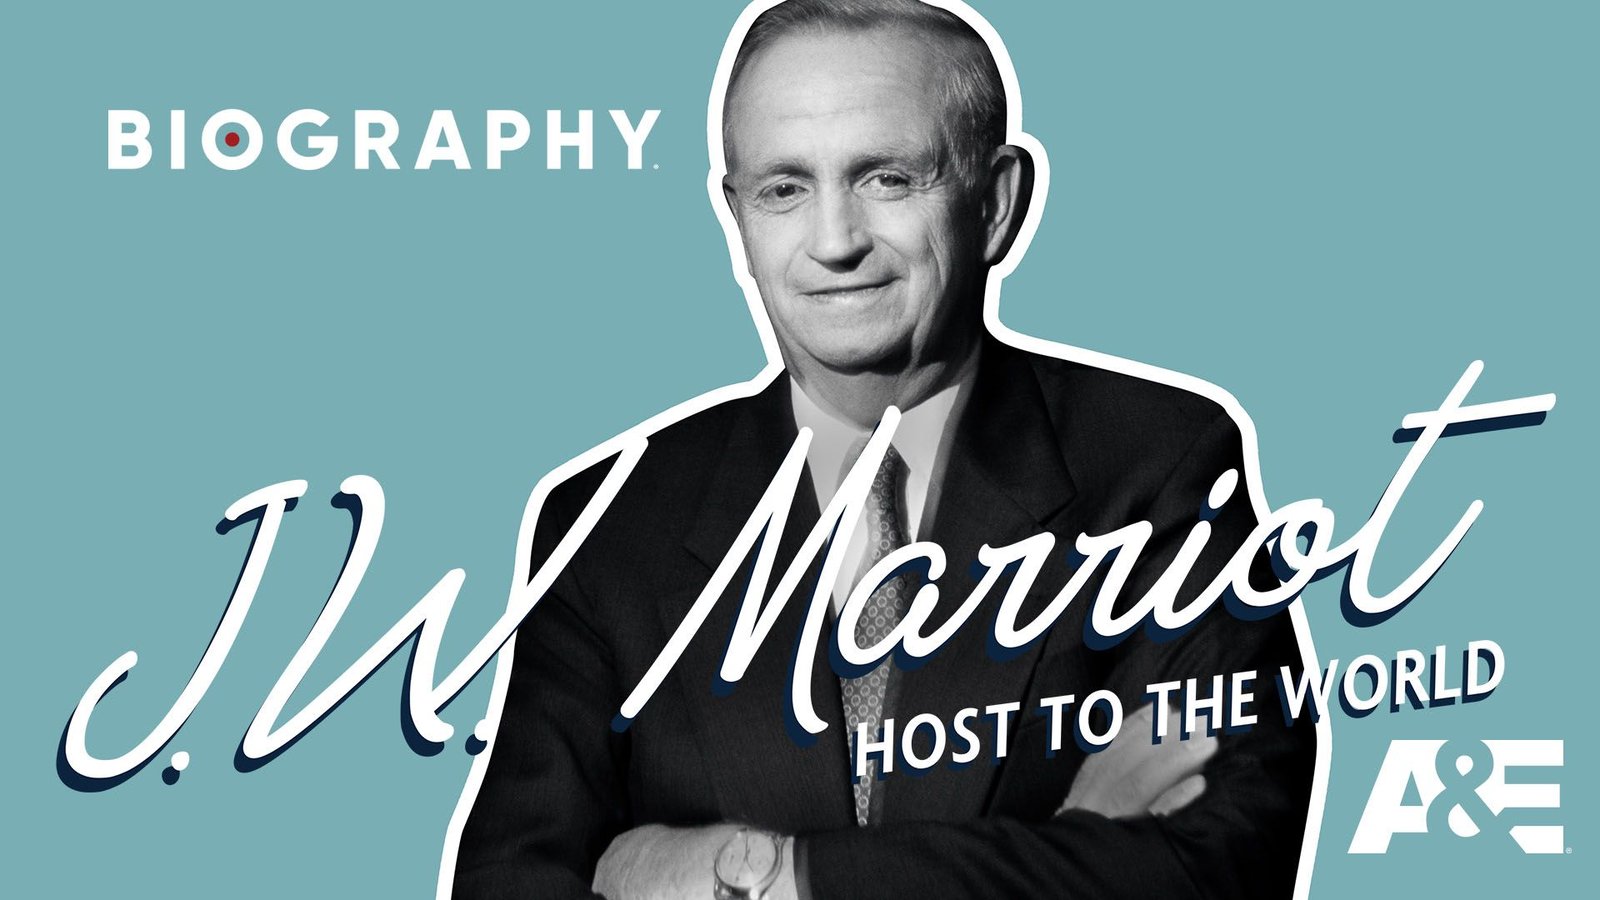 J.W. Marriott: Host To the World